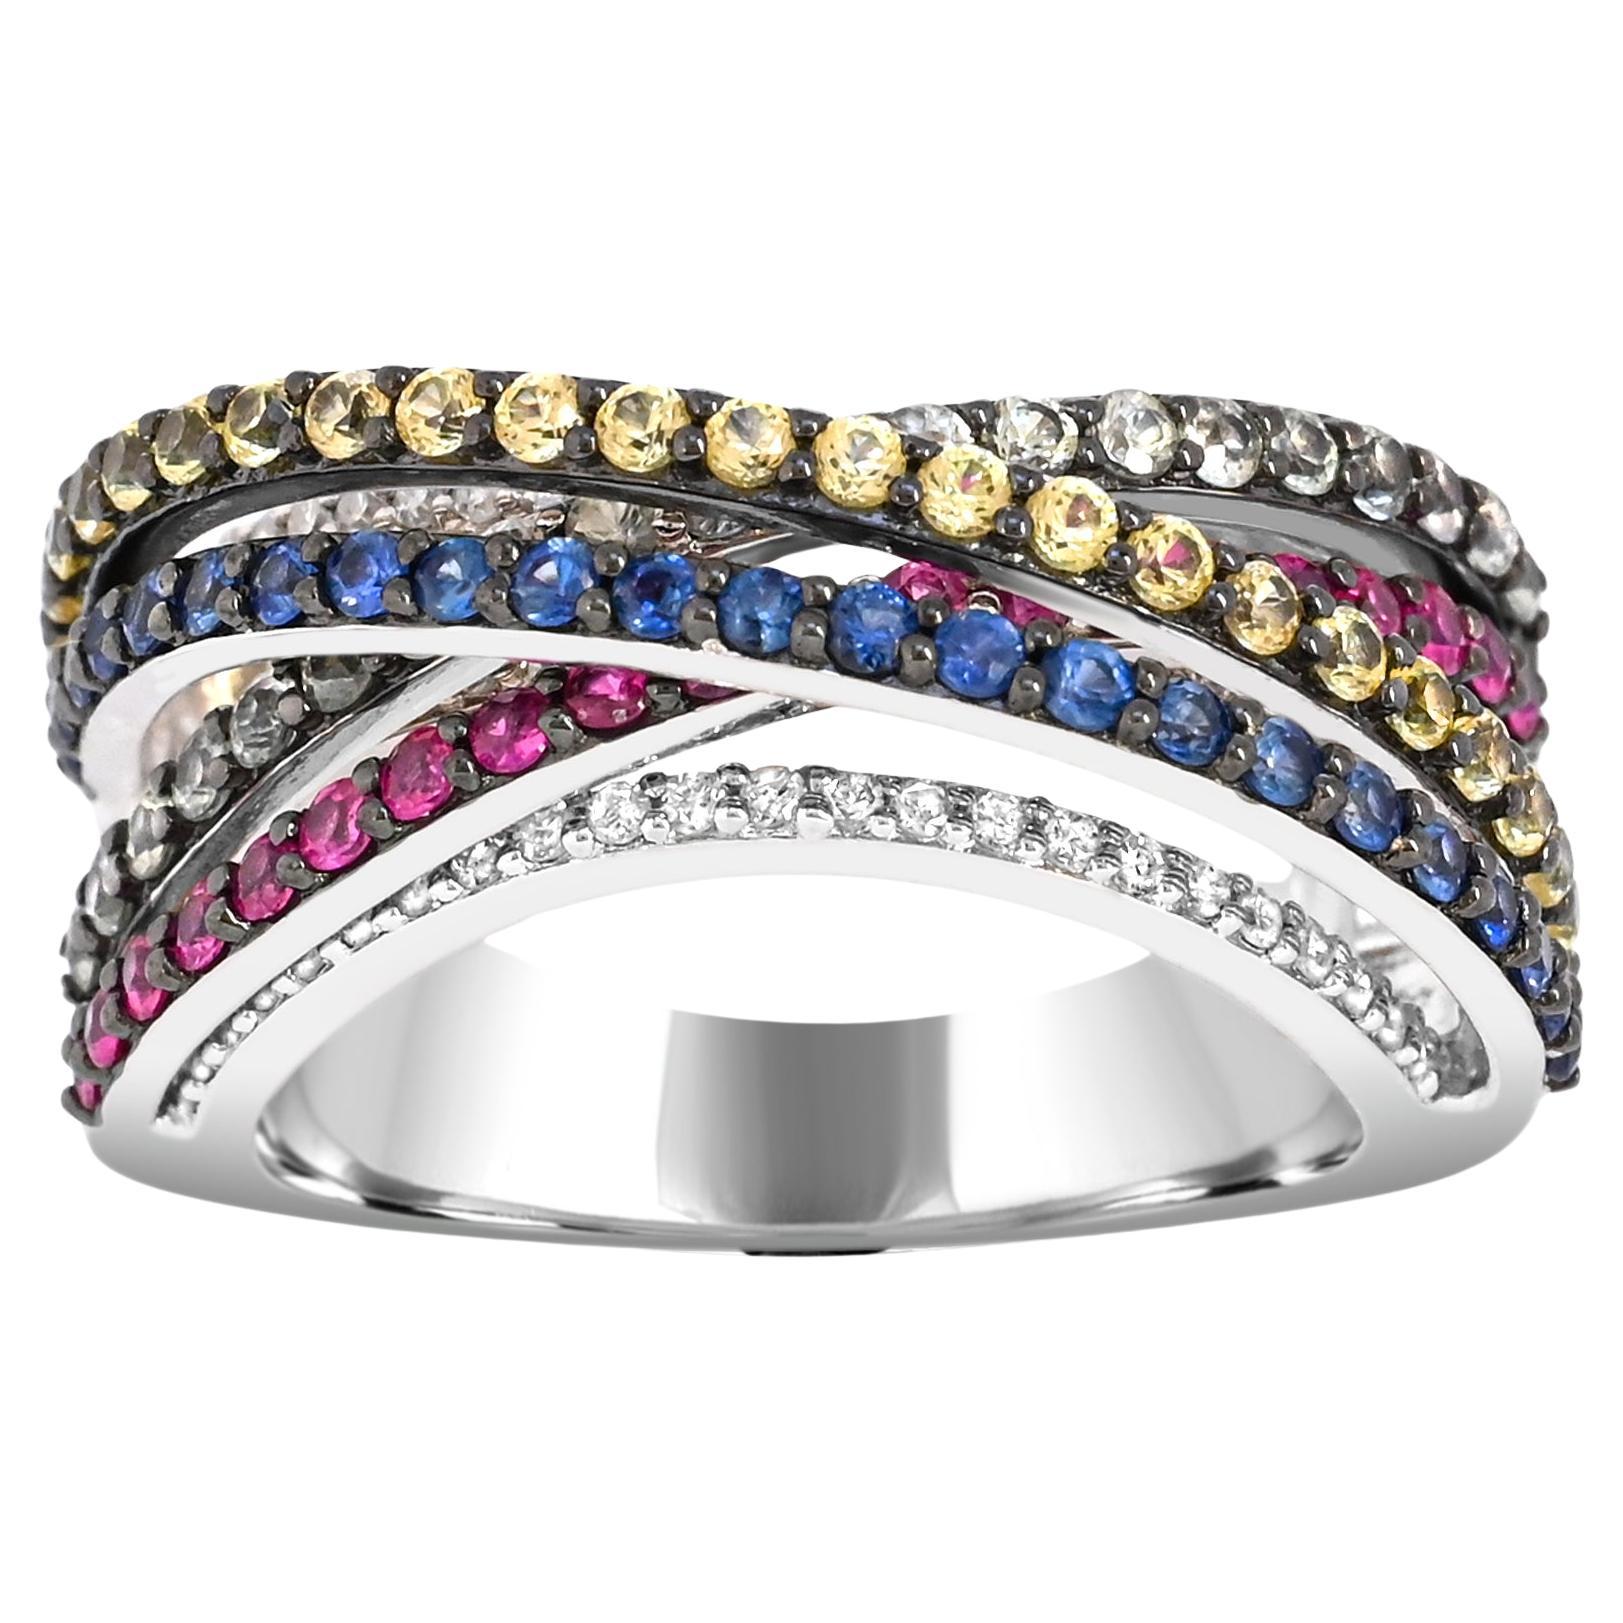 2-7/8ct. Multi-Color Sapphire and Diamond Cross Bridge Ring in Sterling Silver